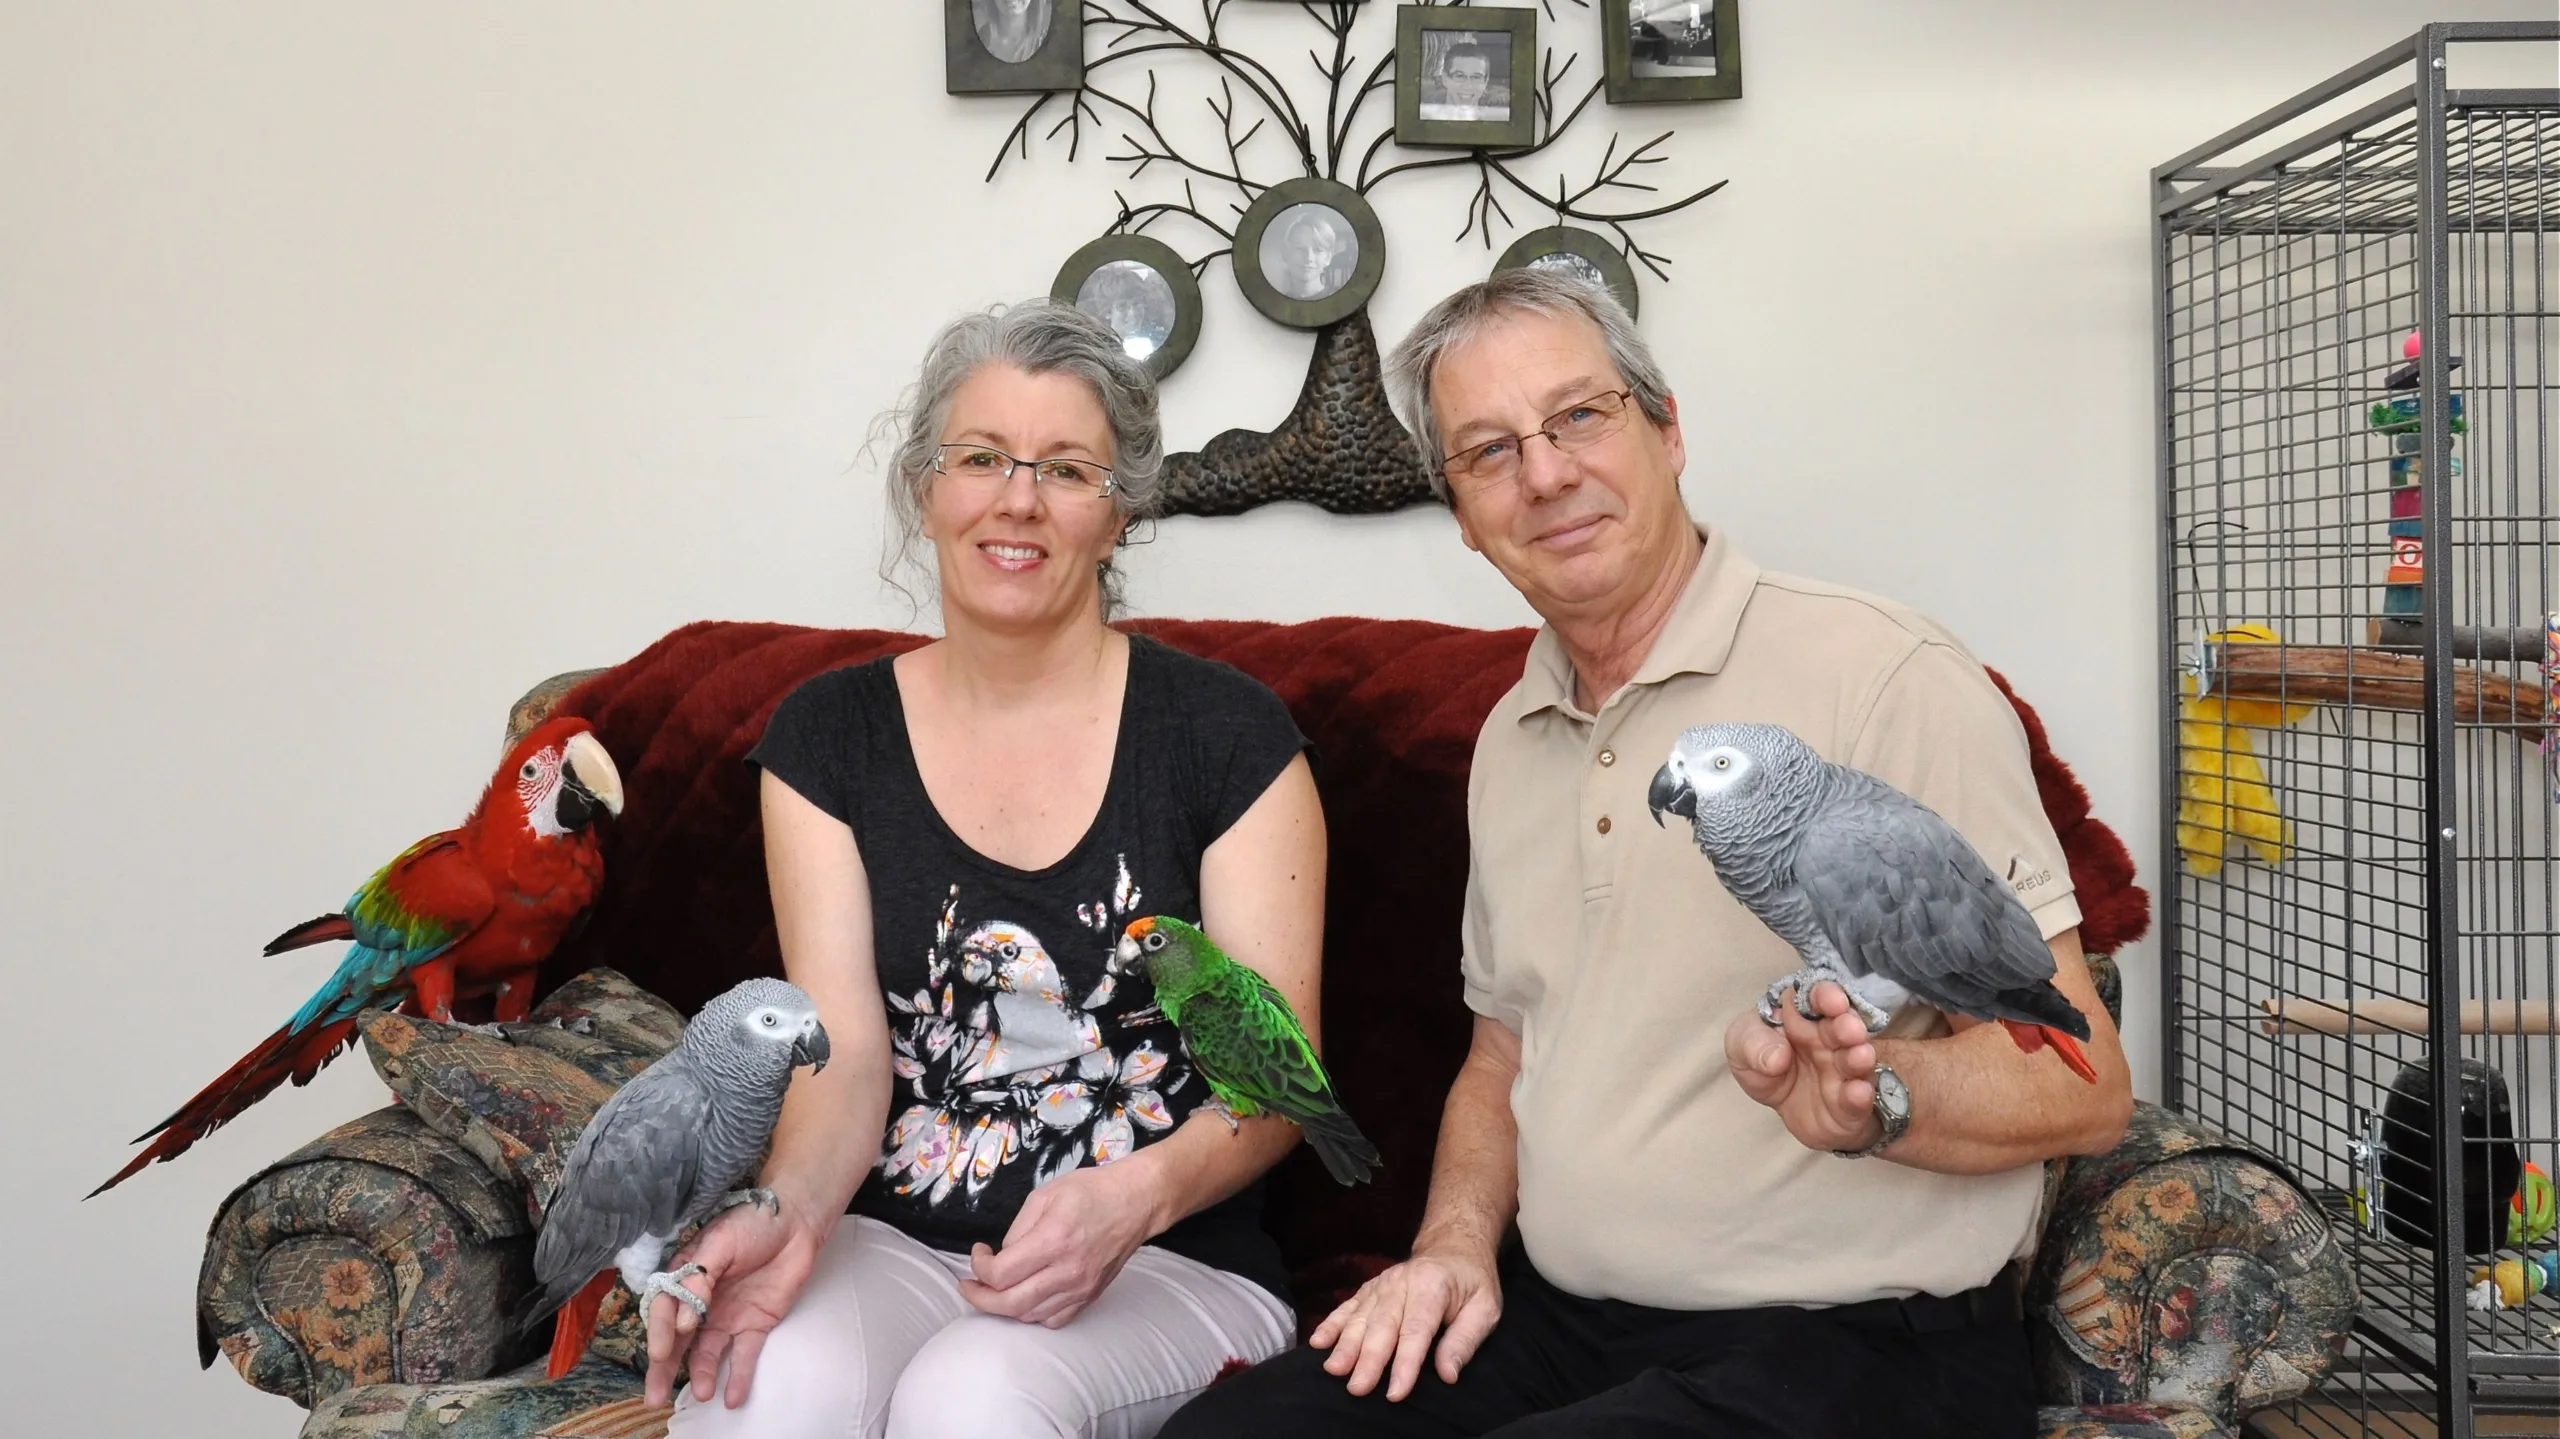 The Perroquets Rio Family